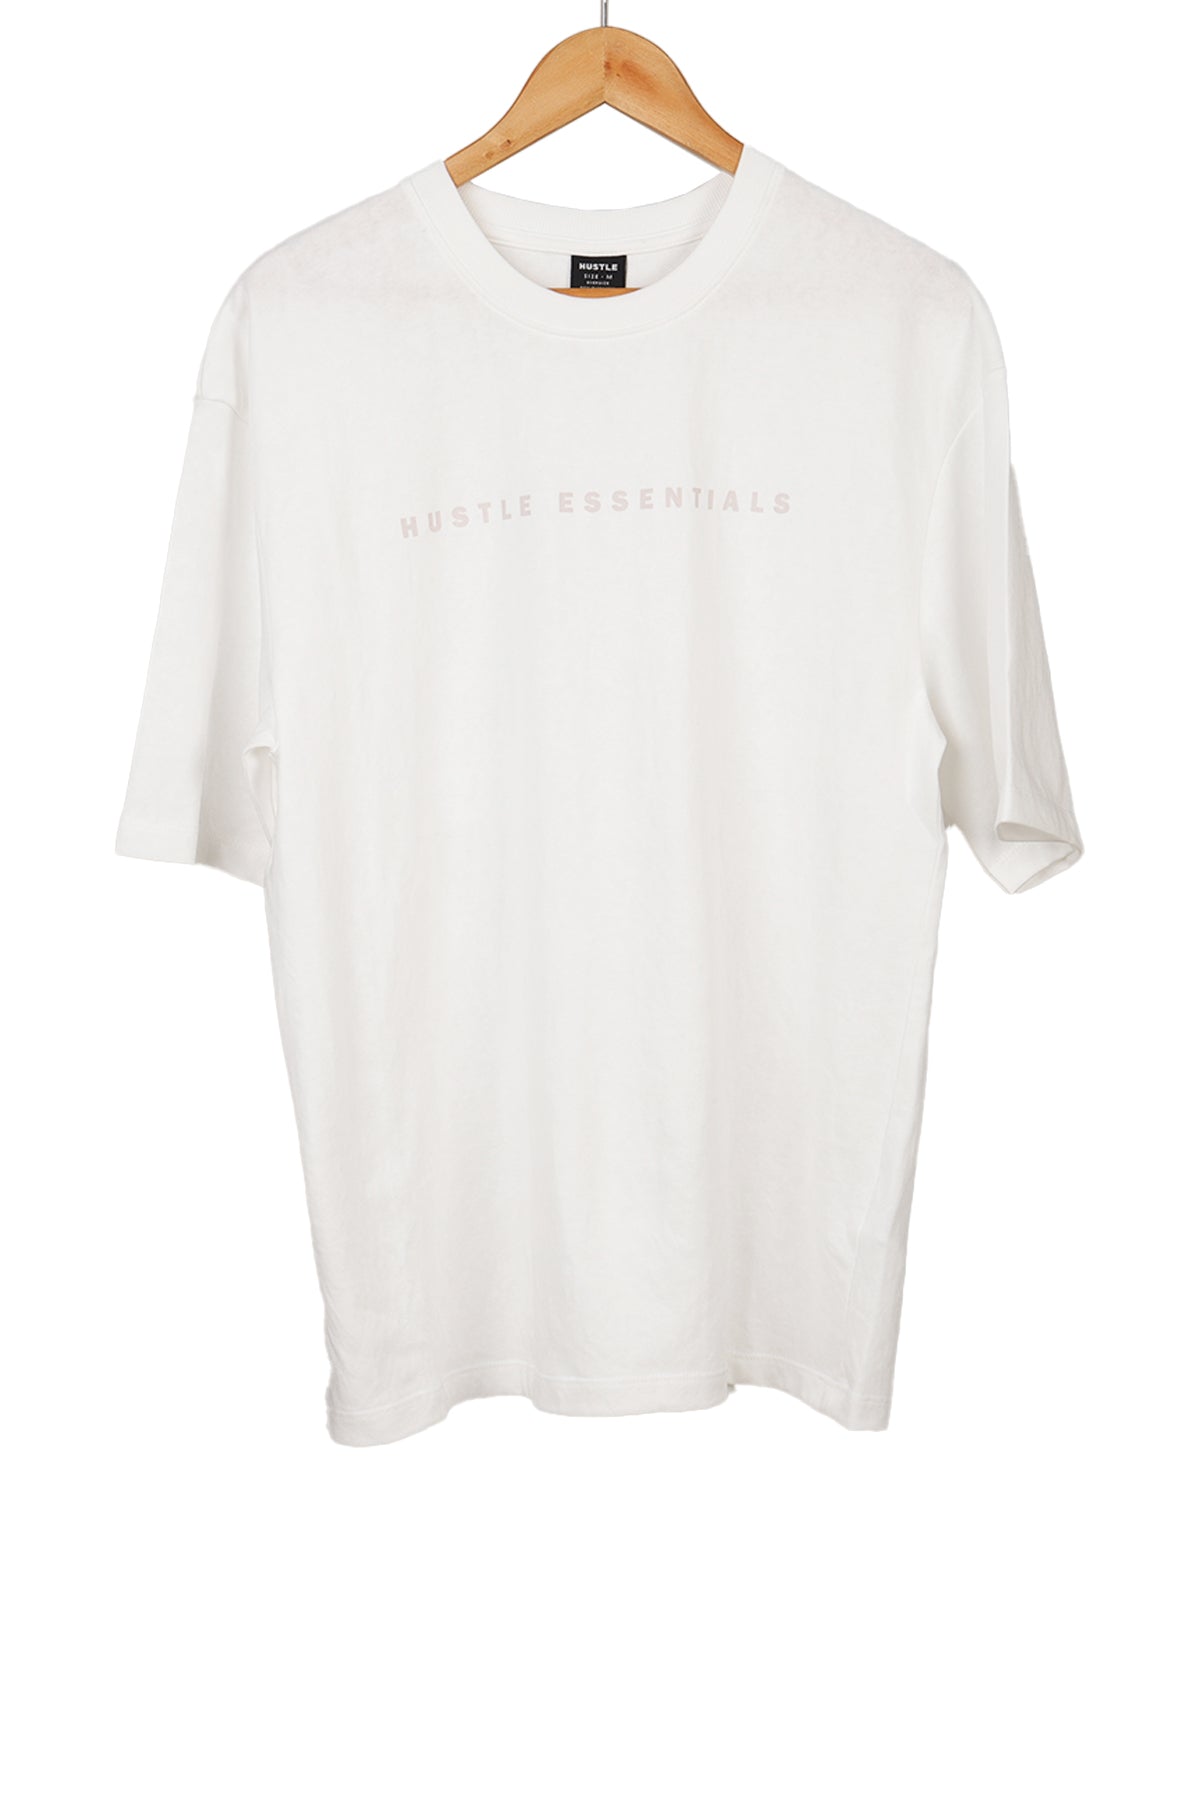 Hustle Men's Short Sleeve Oversize Casual T-Shirt